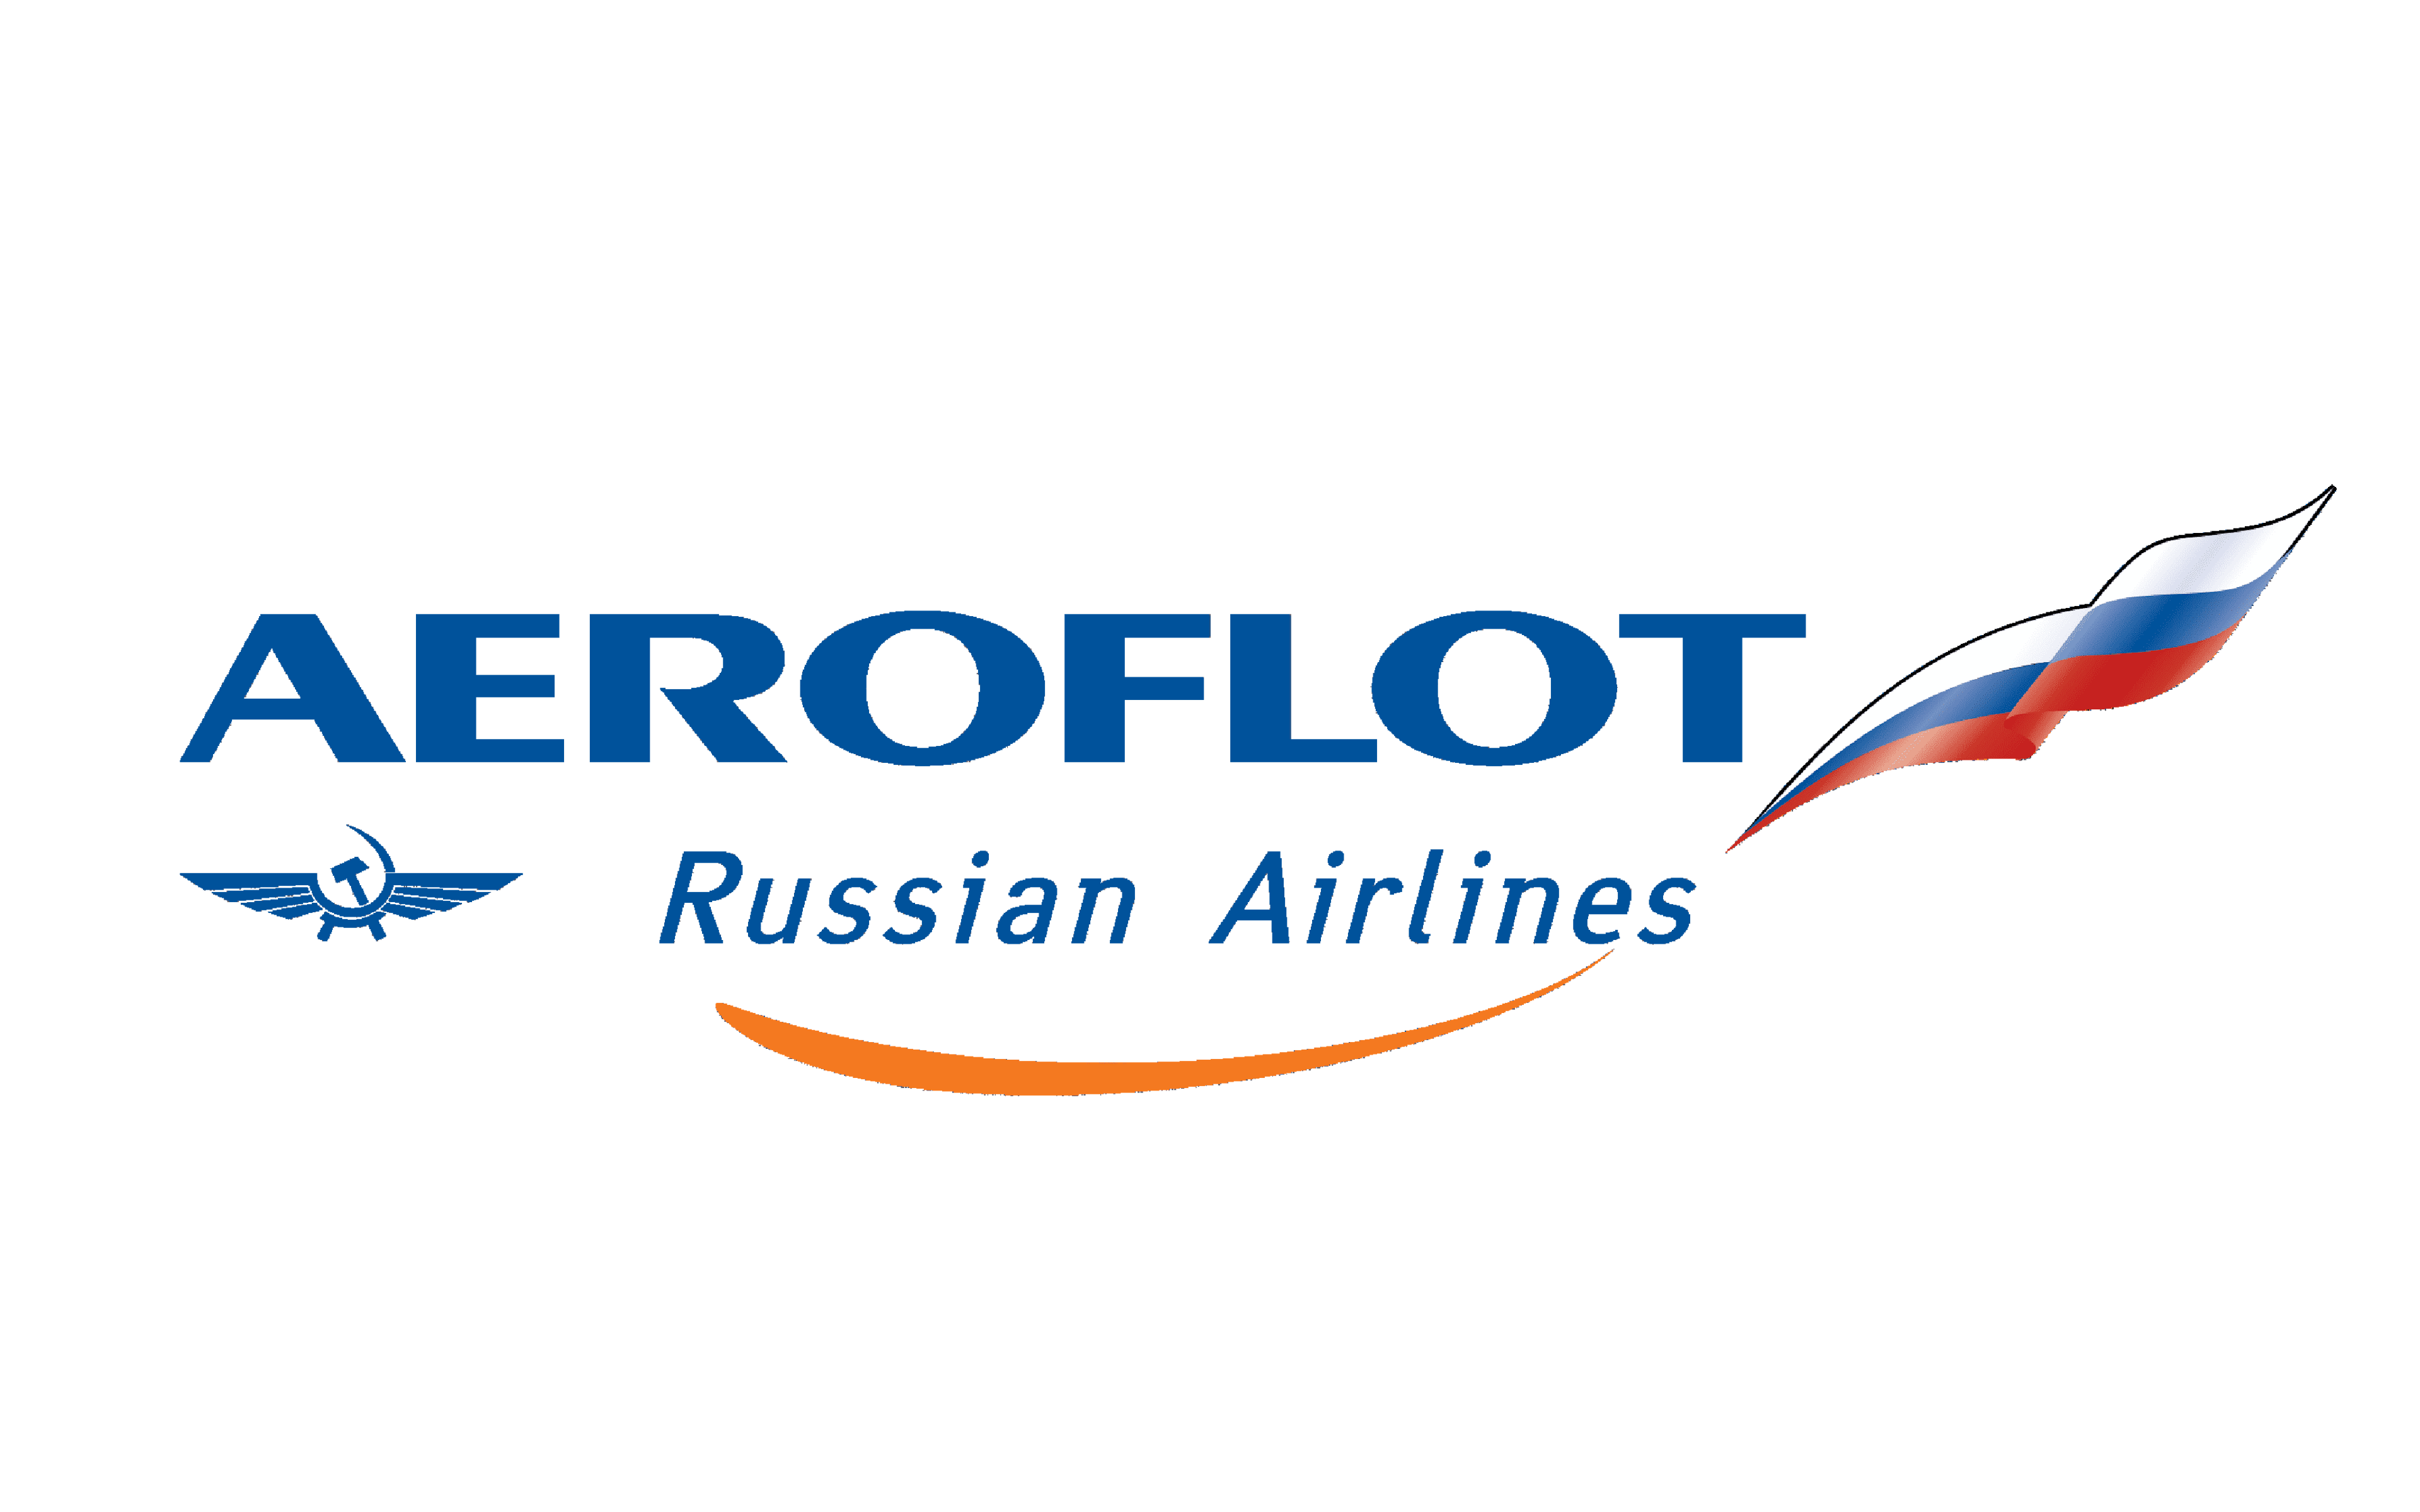 Aeroflot Russian Airlines logo.